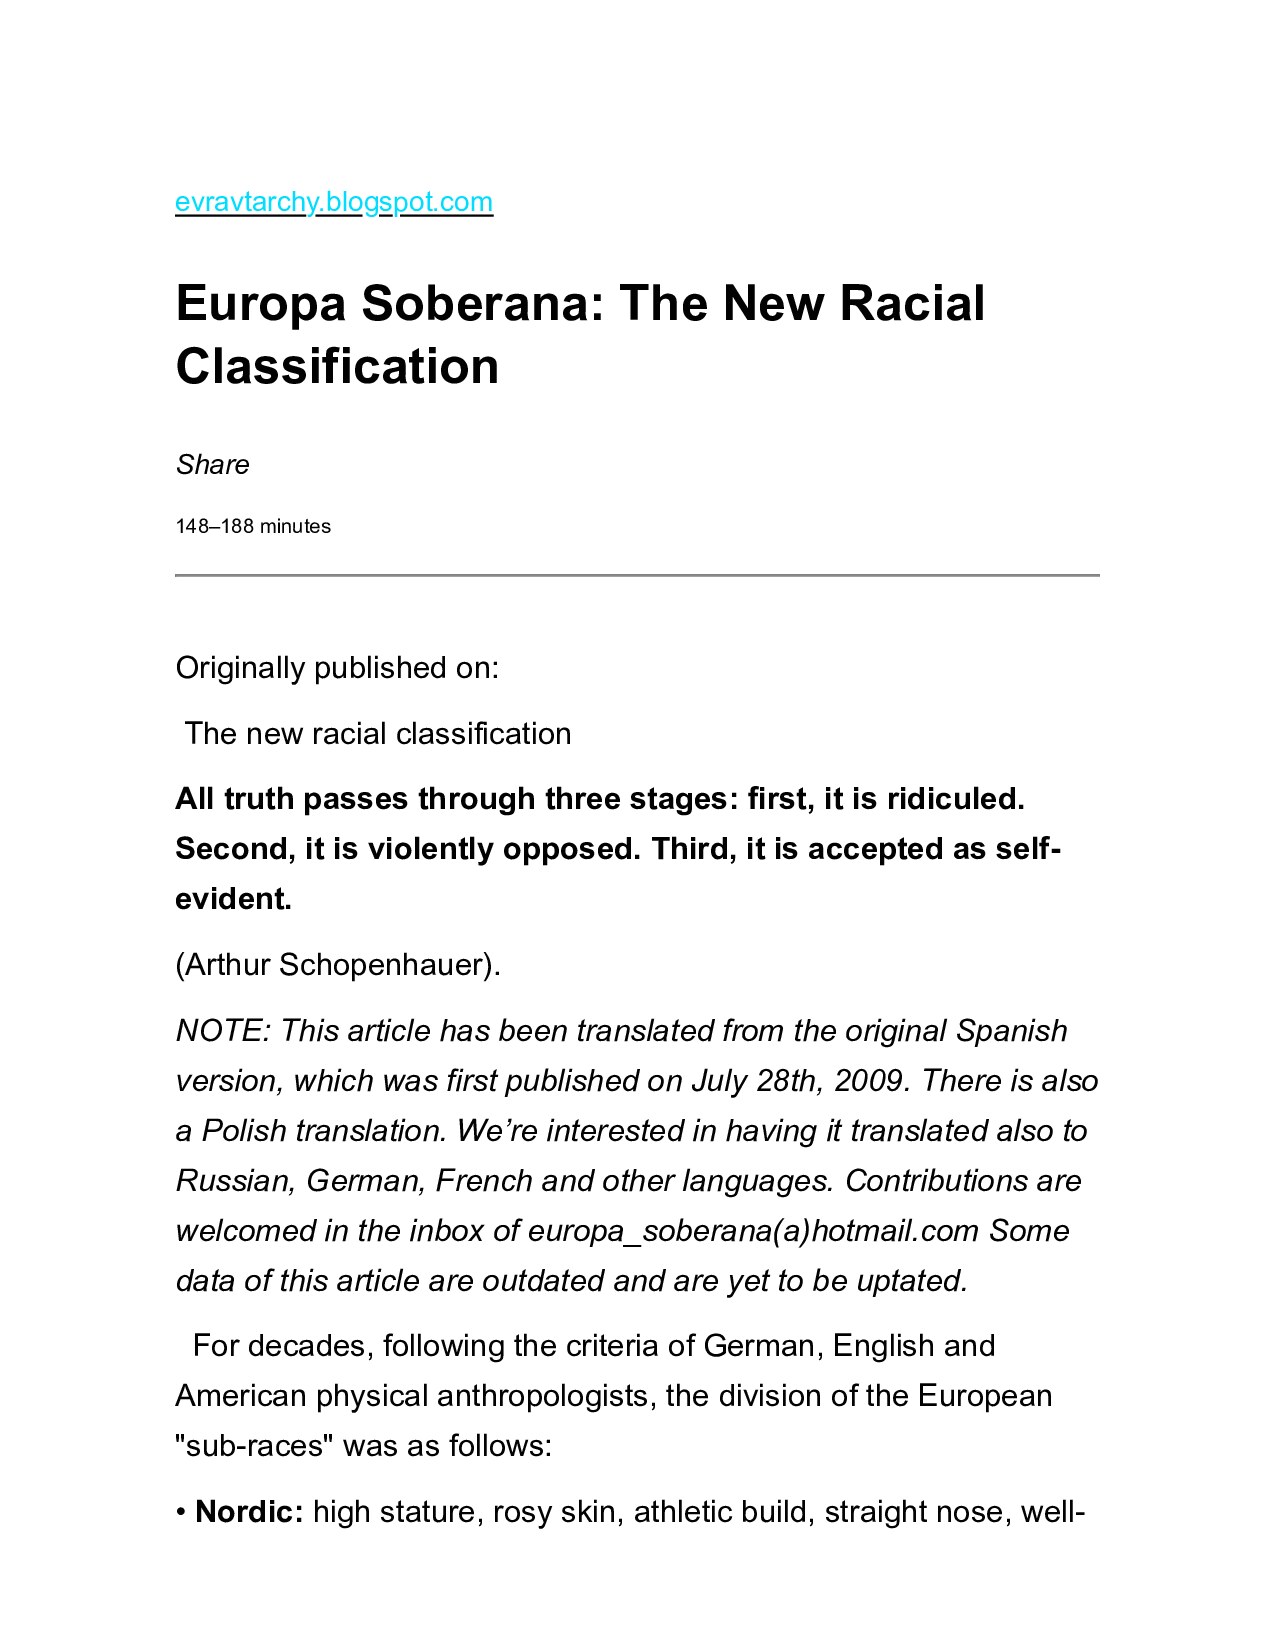 Europa Soberana: The New Racial Classification